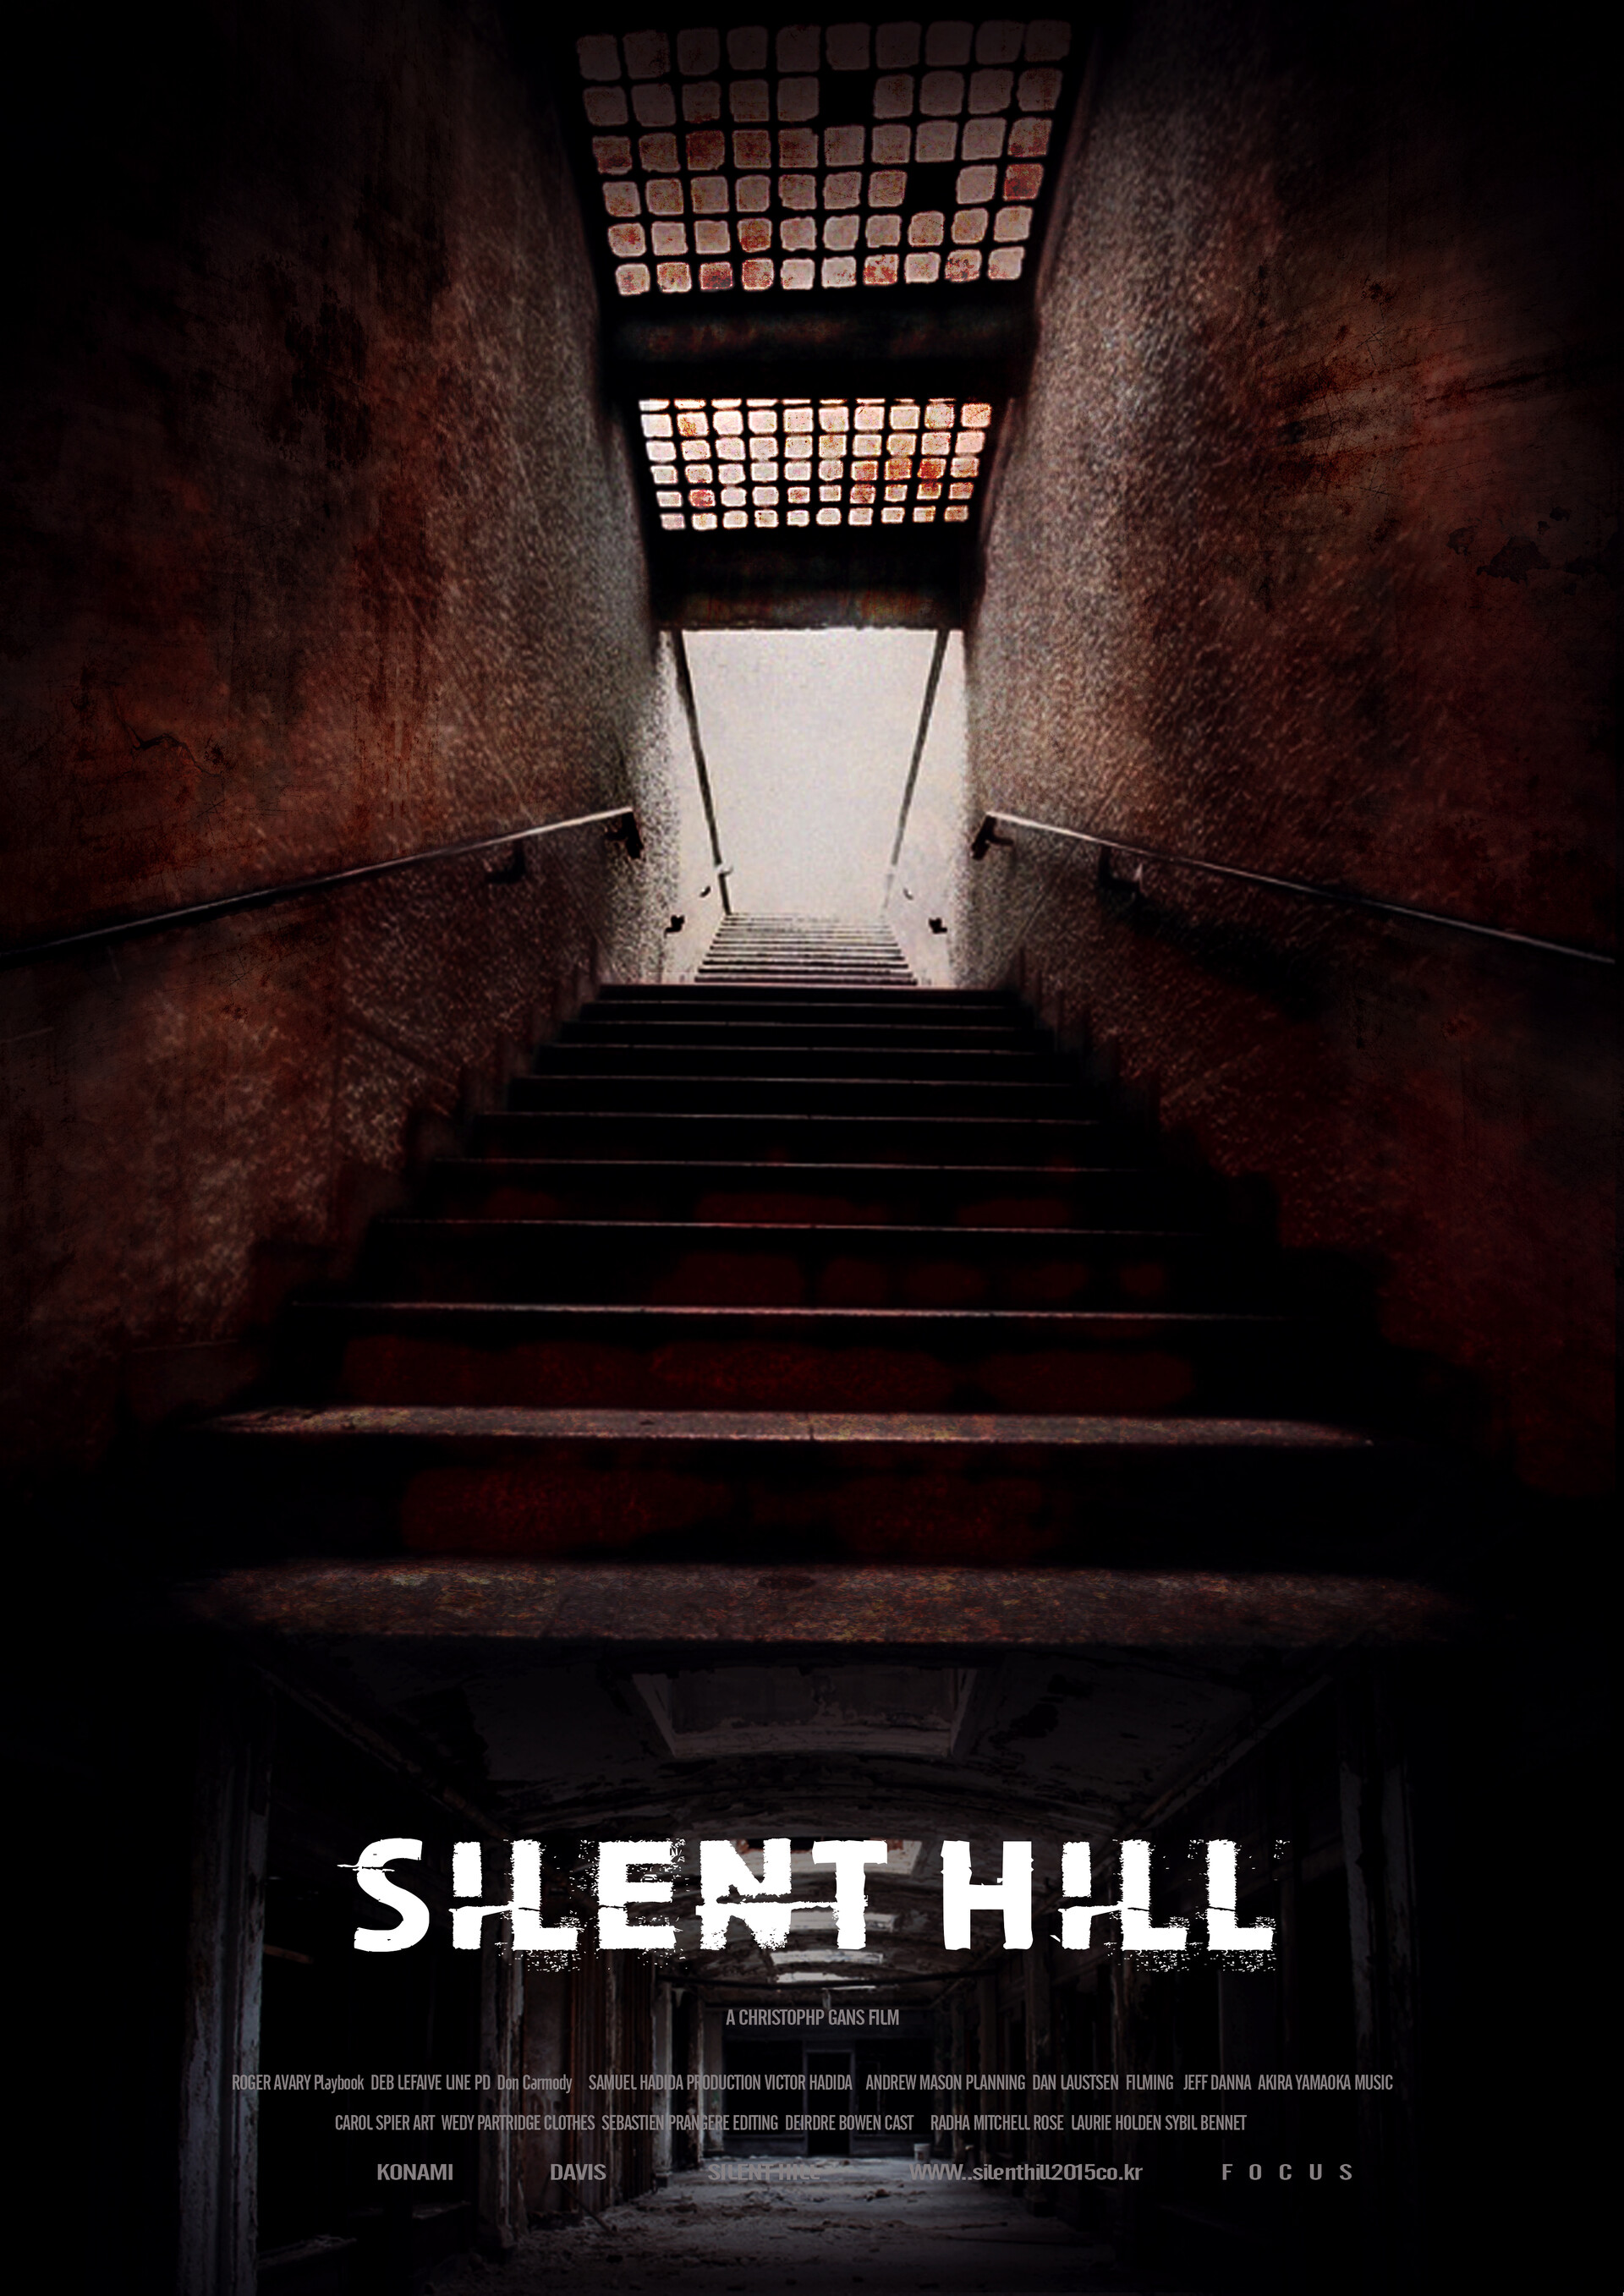 SILENT HILL (Official) 